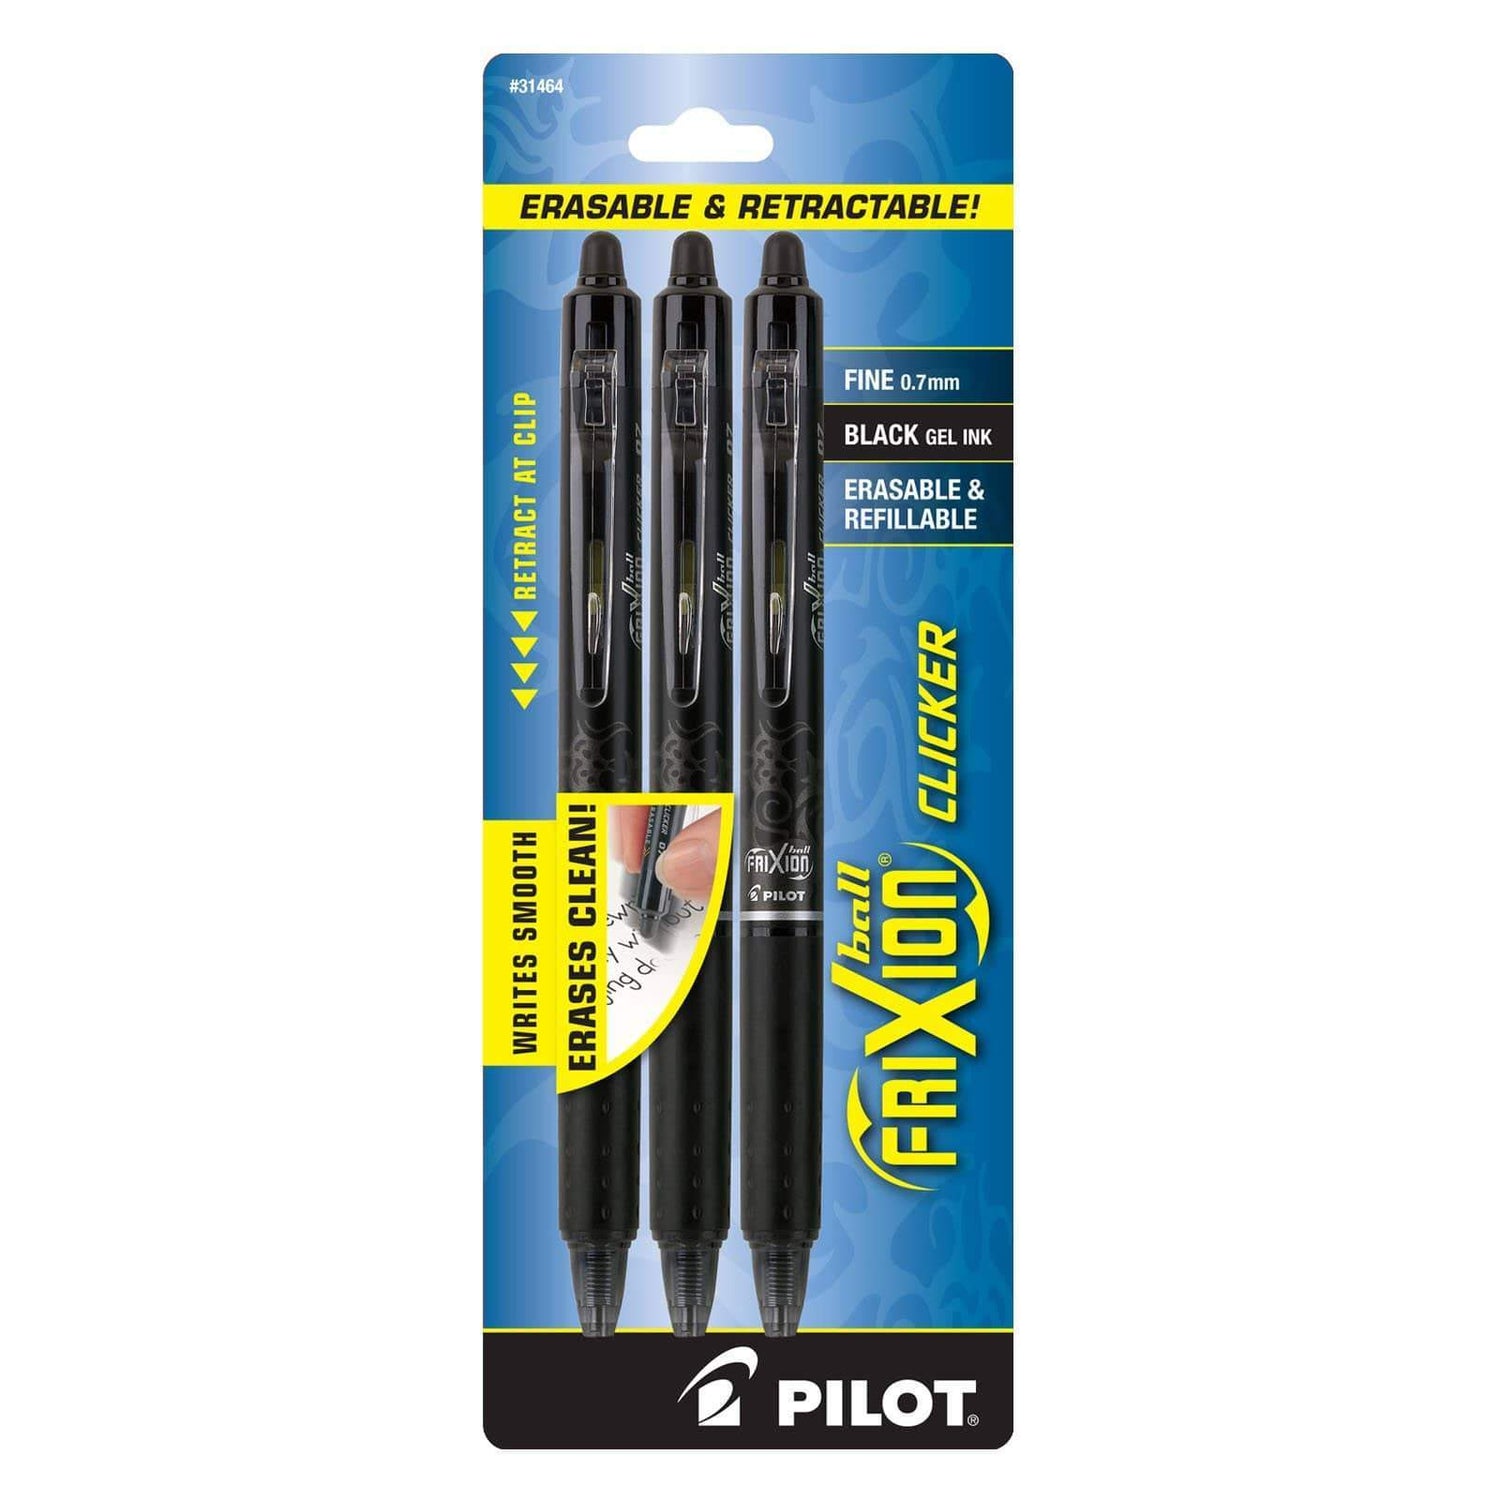 Pilot Frixion Erasable Pens Rocketbook